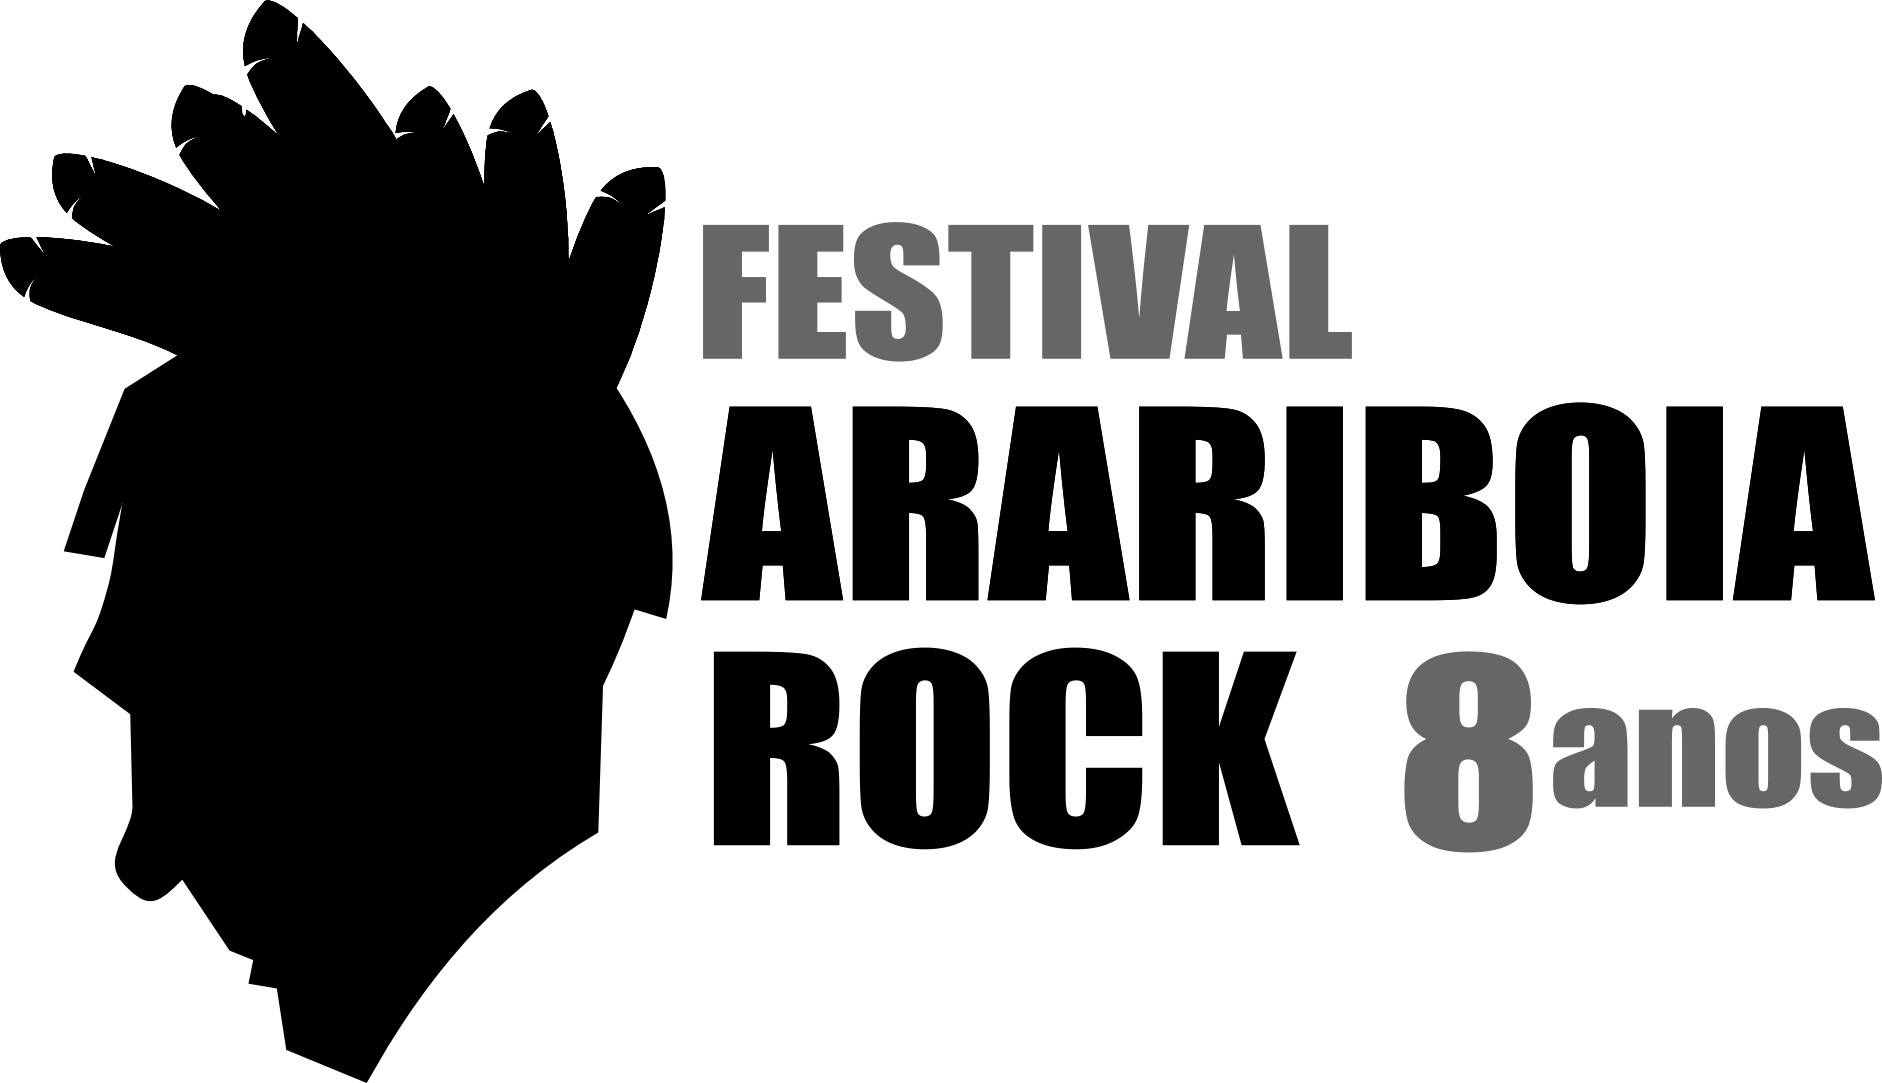 168-rodada-de-workshopsfestival-arariboiarock-8-anos